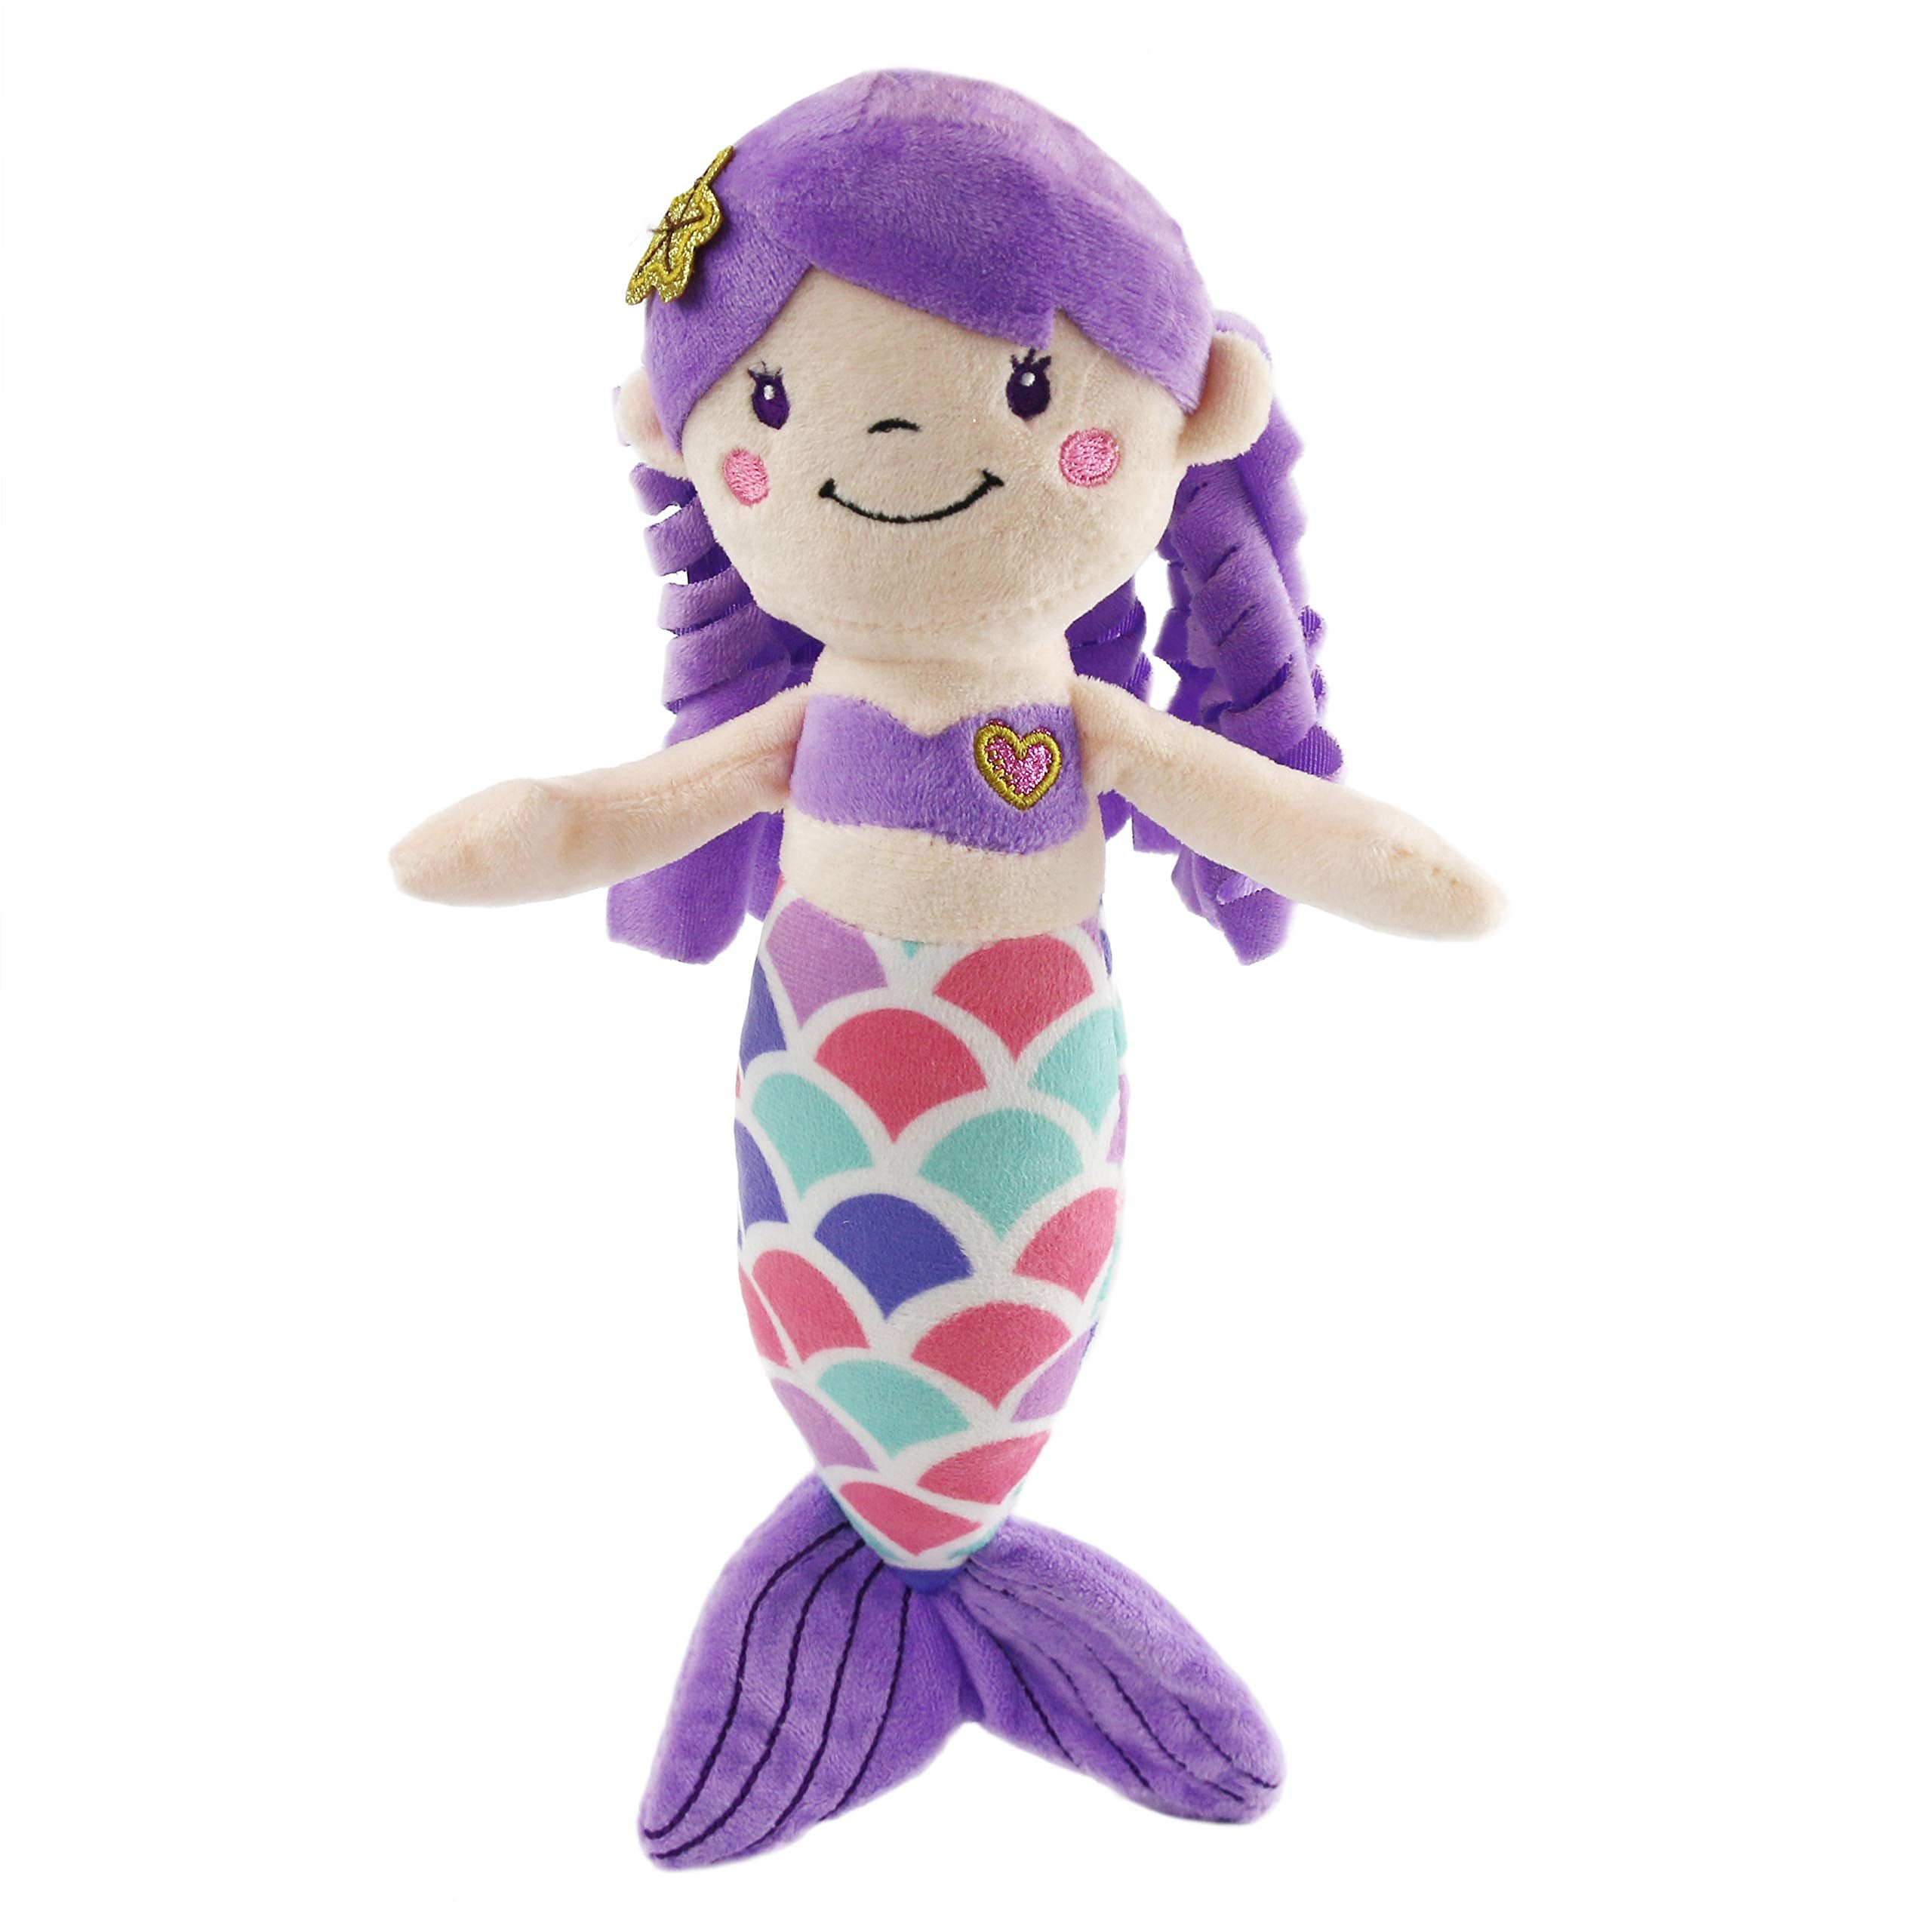 Athoinsu Mermaid Princess Stuffed Animals Soft Plush 12'' - Glow Guards